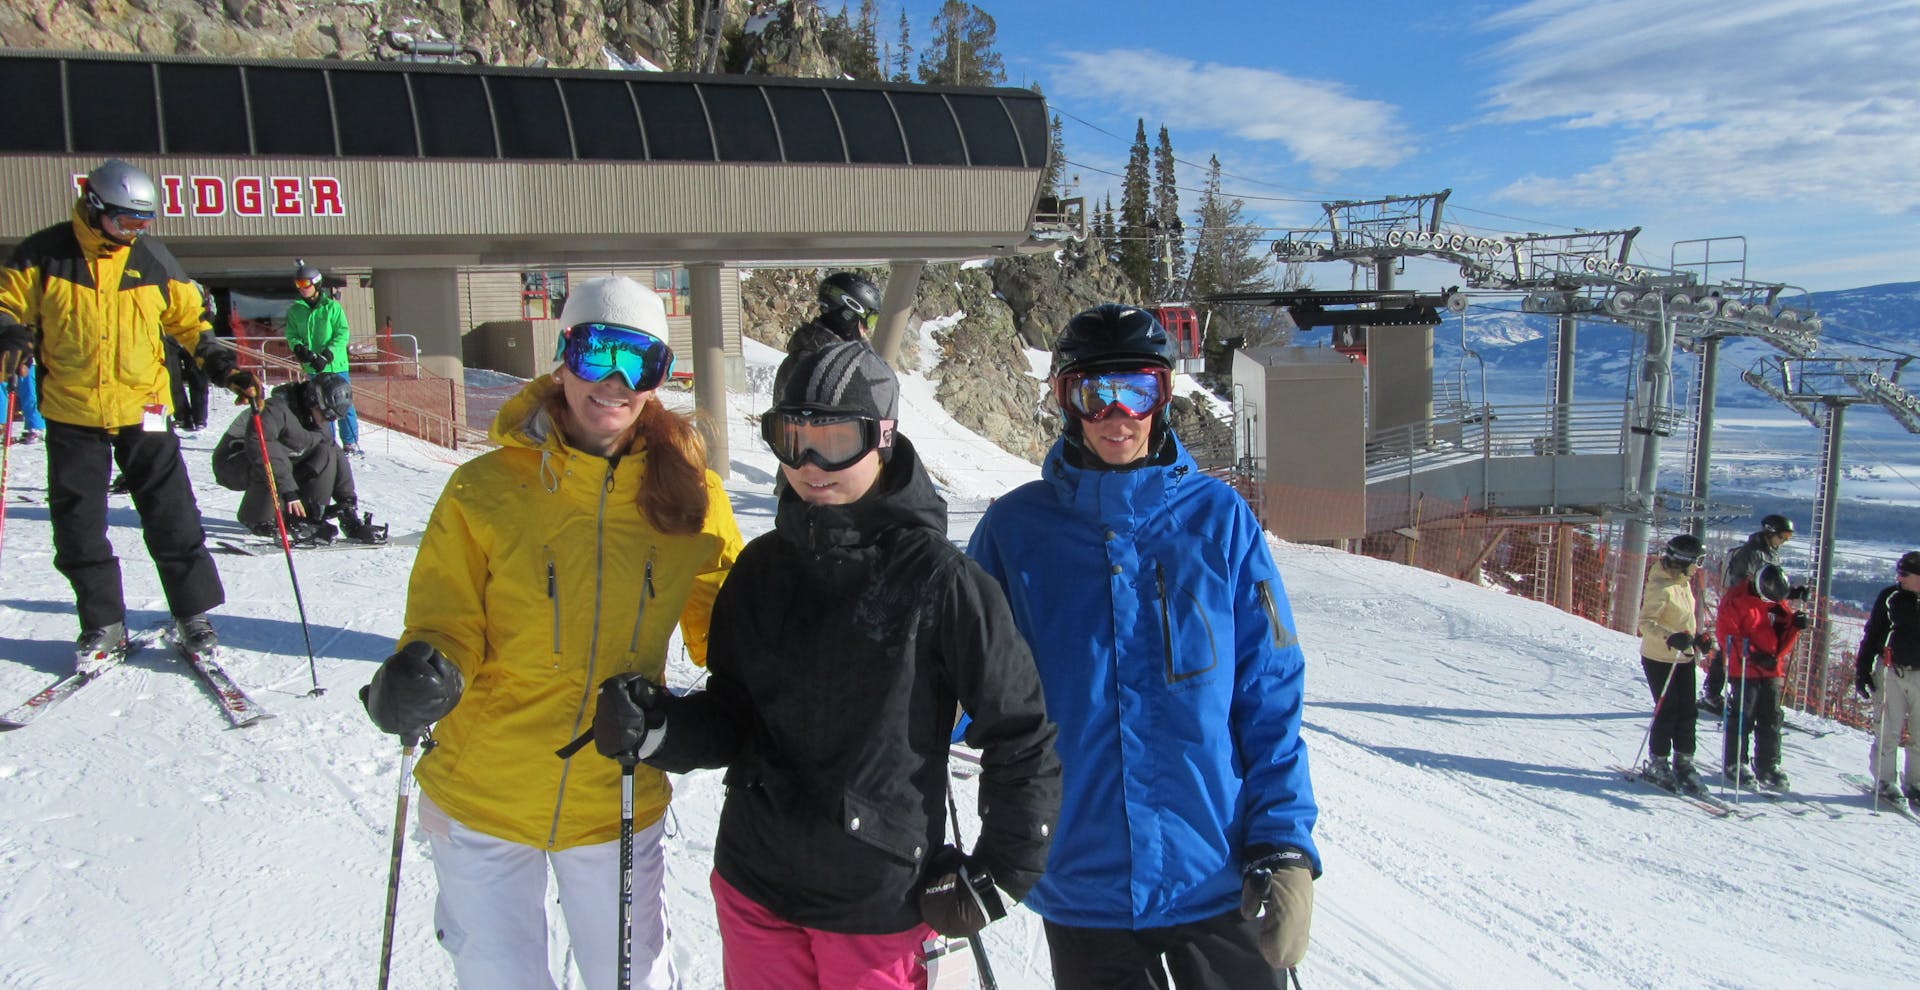 A family at Jackson Hole Mountain Ski Resort